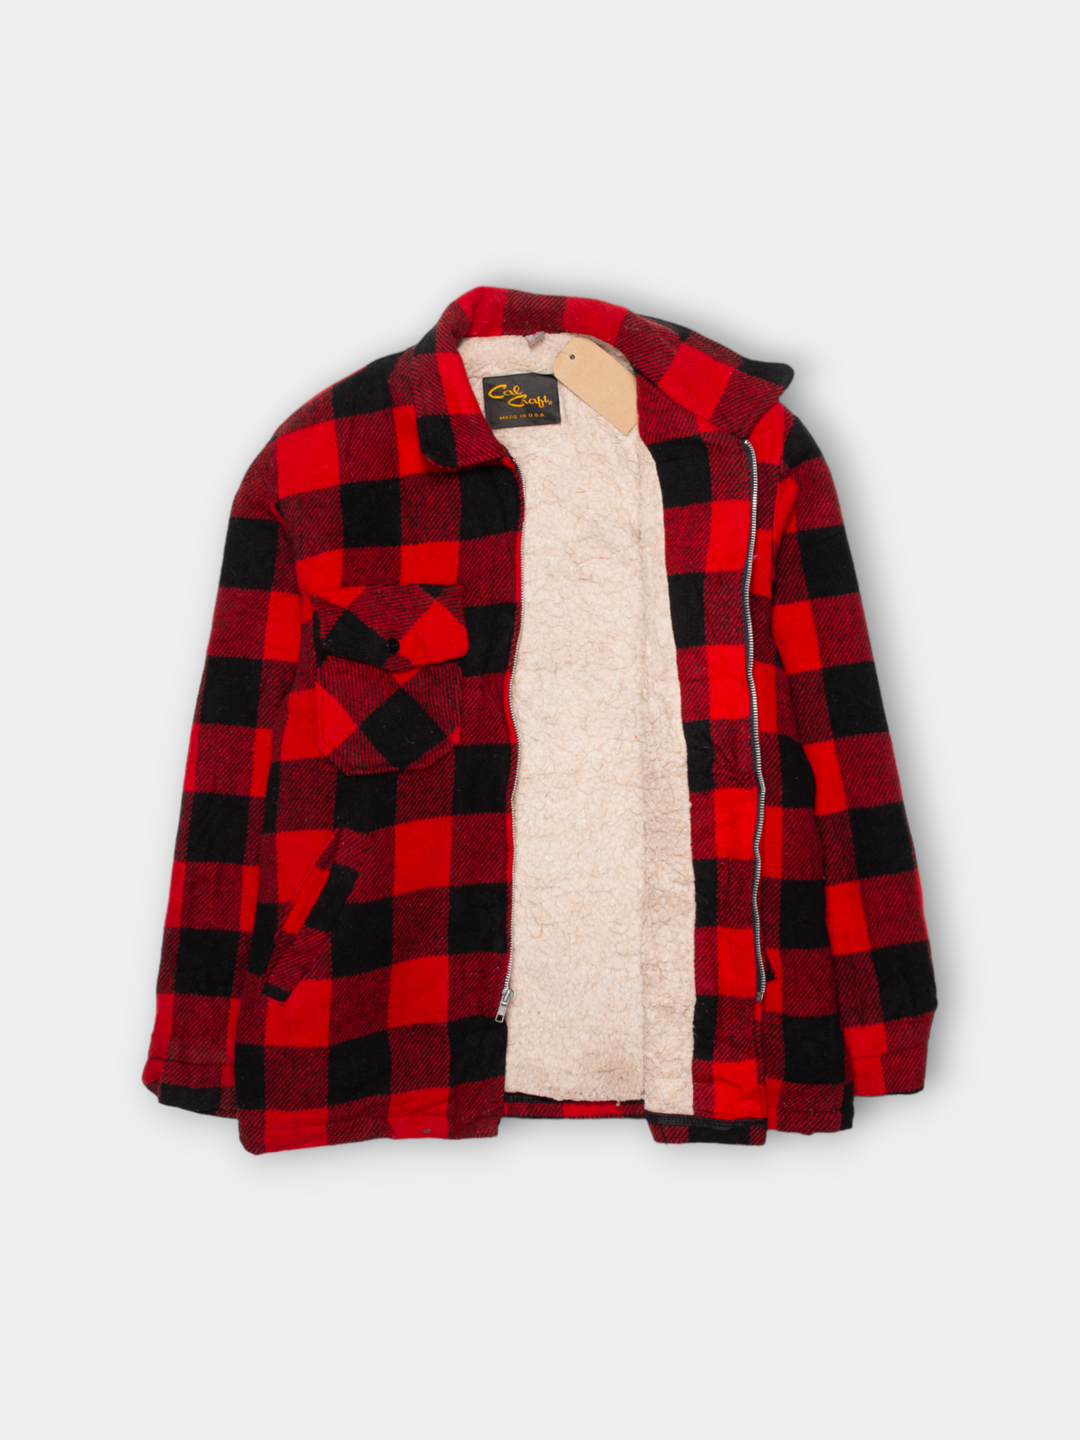 Vintage Heavy Woolen Lumberjack Shirt (L)